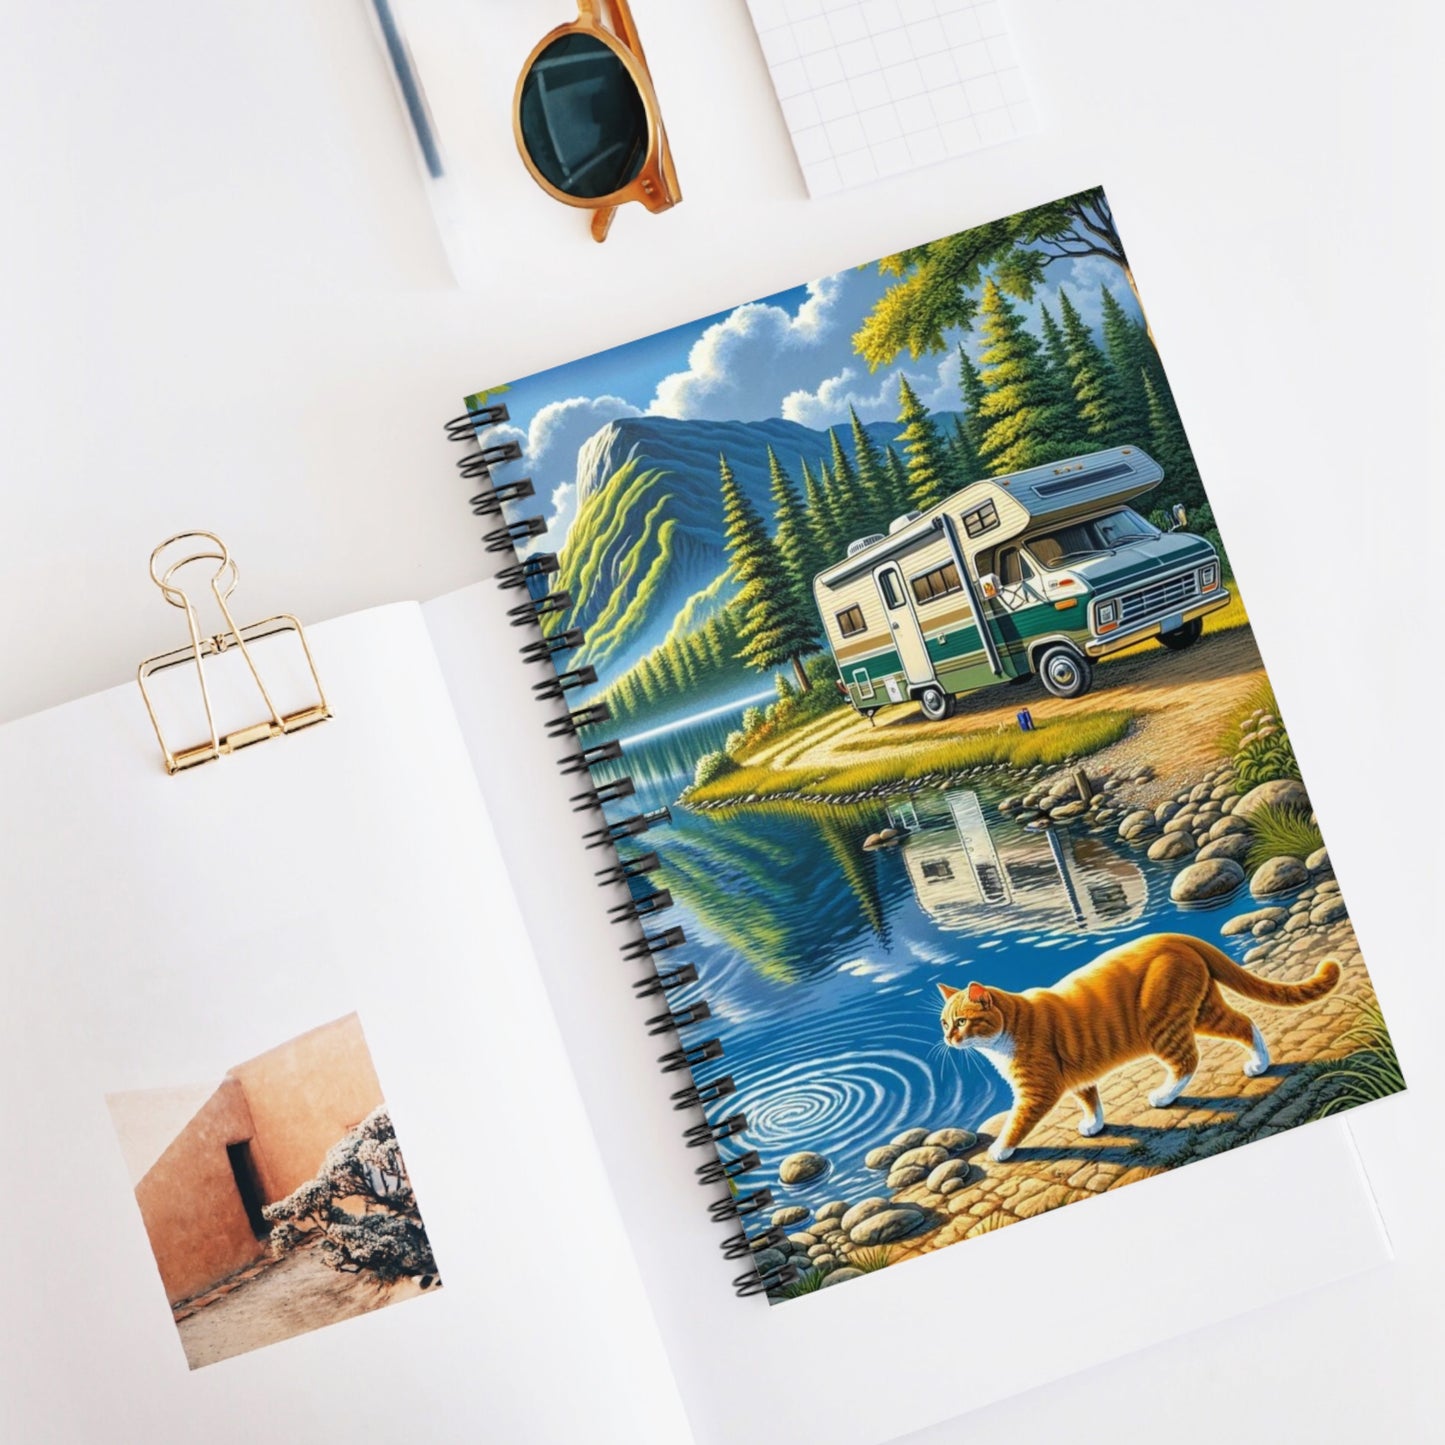 Orange Kitty Lake Adventures - Spiral Notebook - Ruled Line - Montecore PawPrints